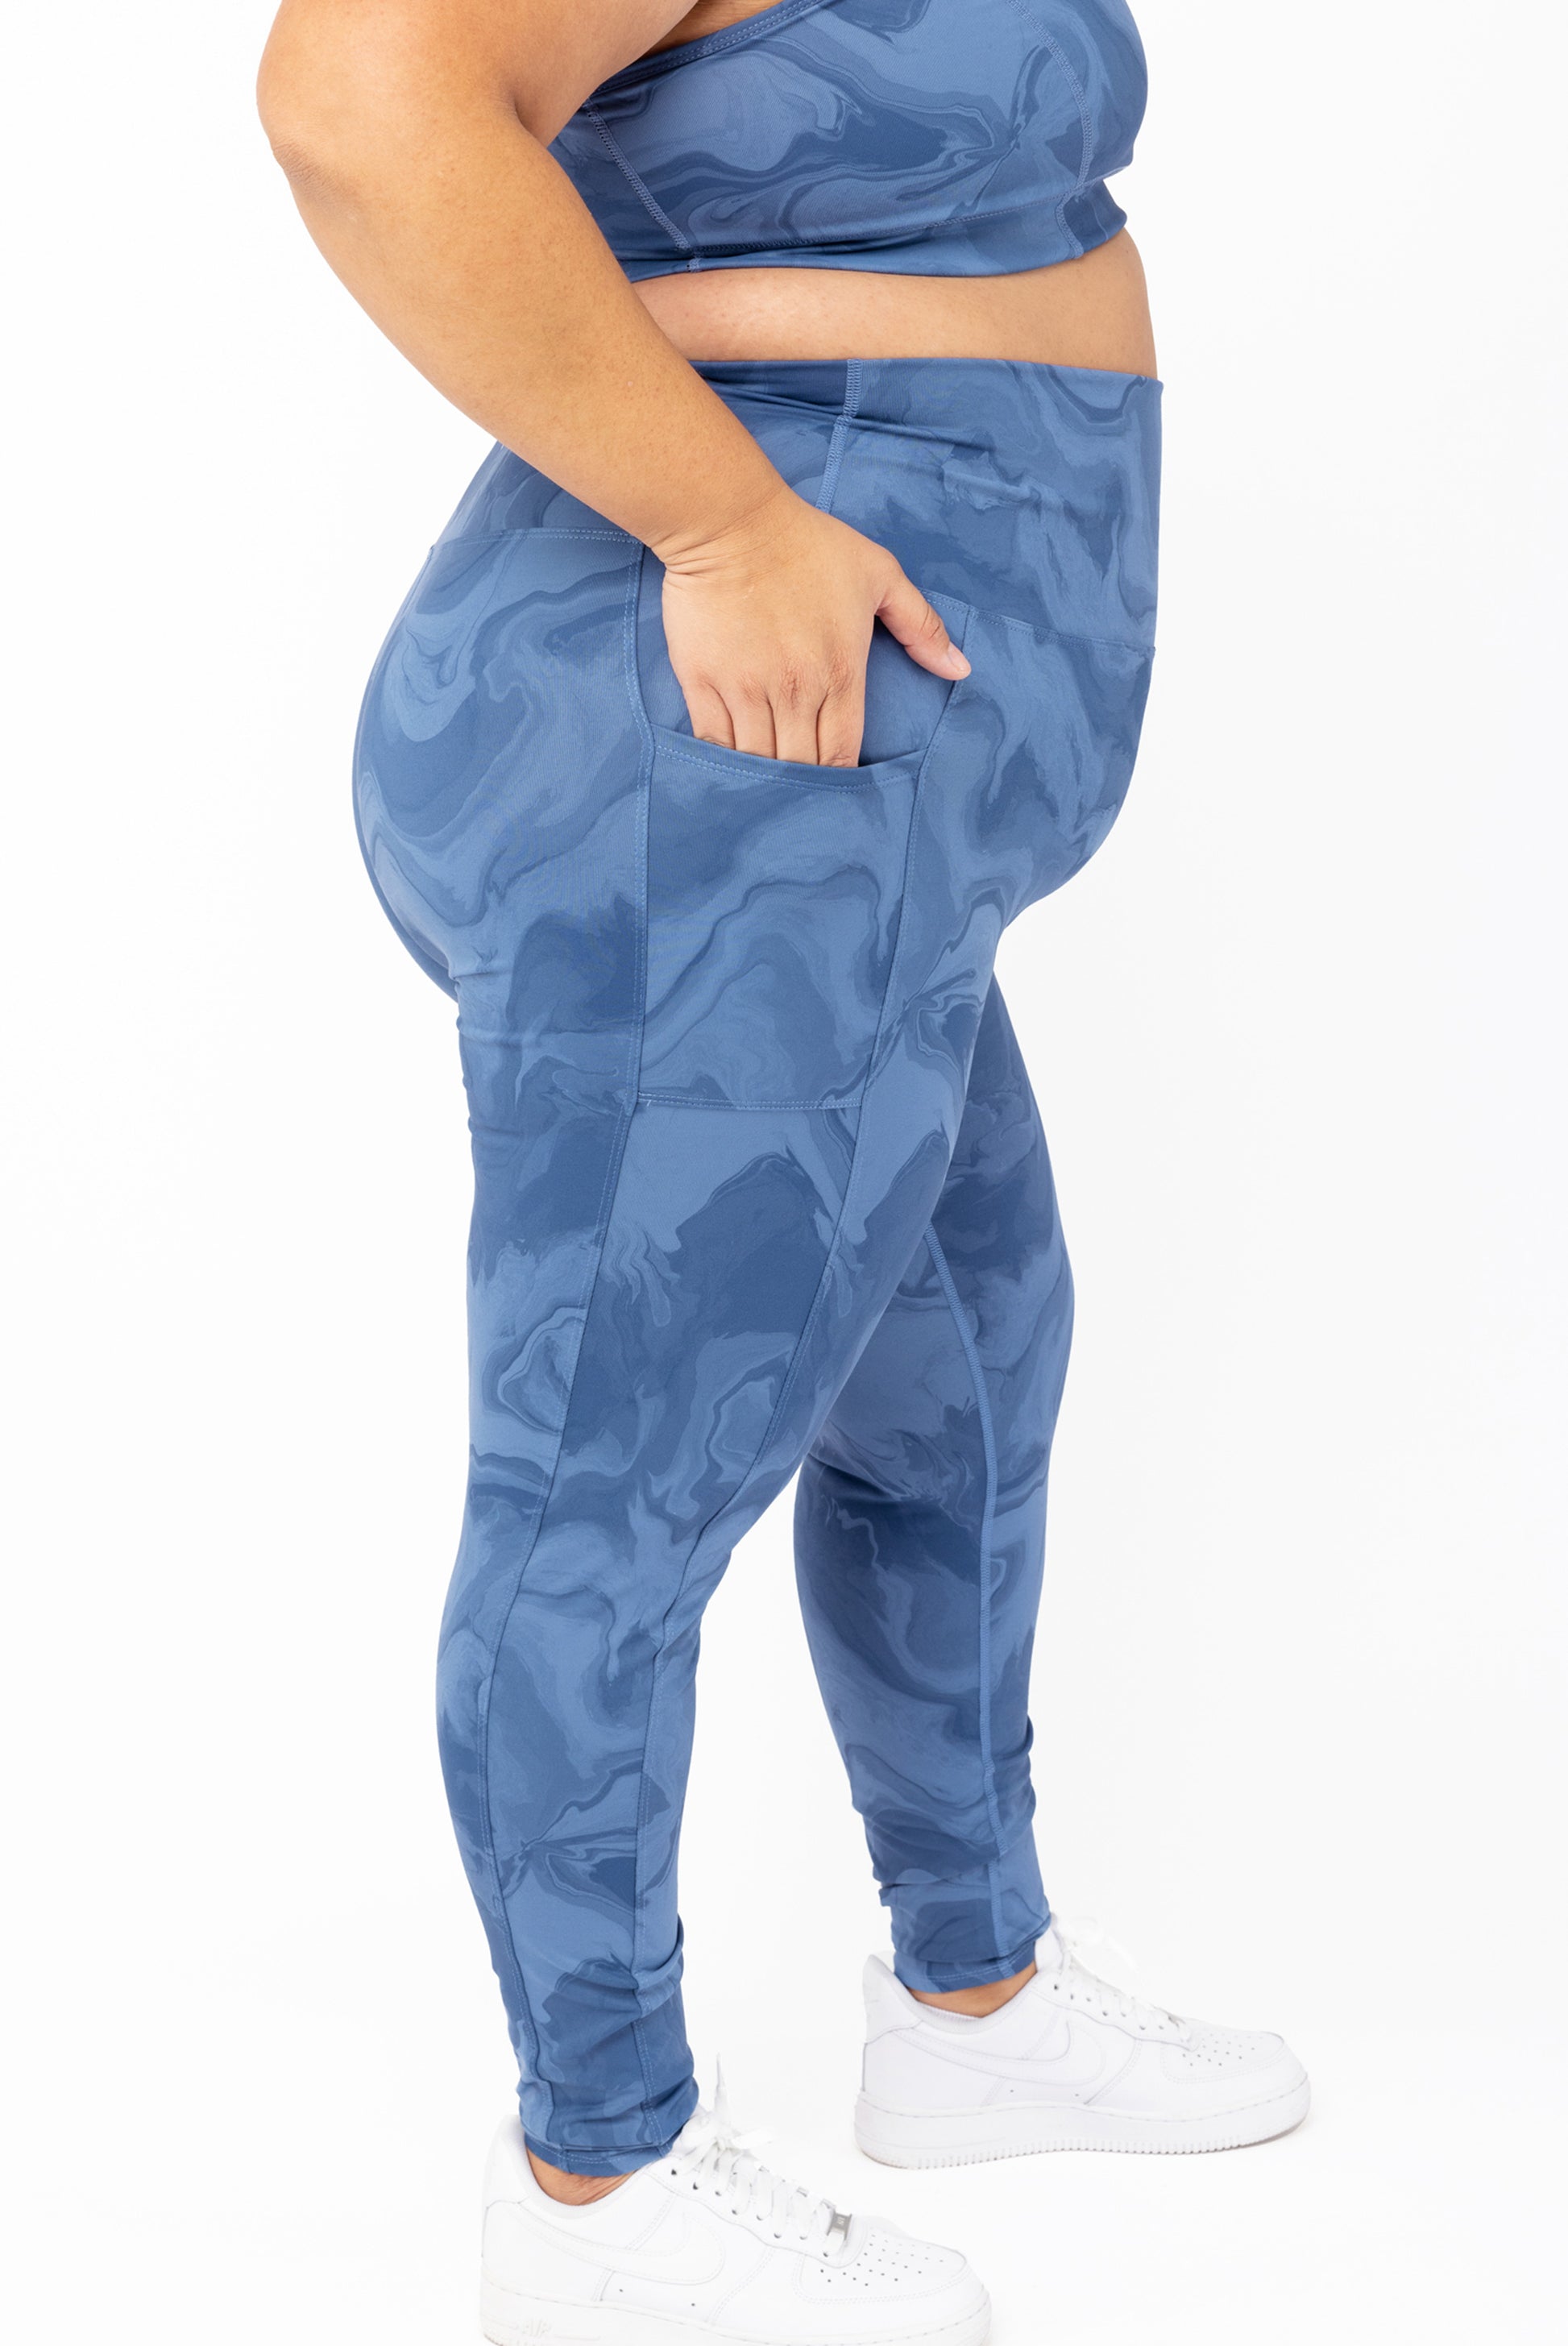 profile view of SuperHold pocket leggings in moonlight marble print